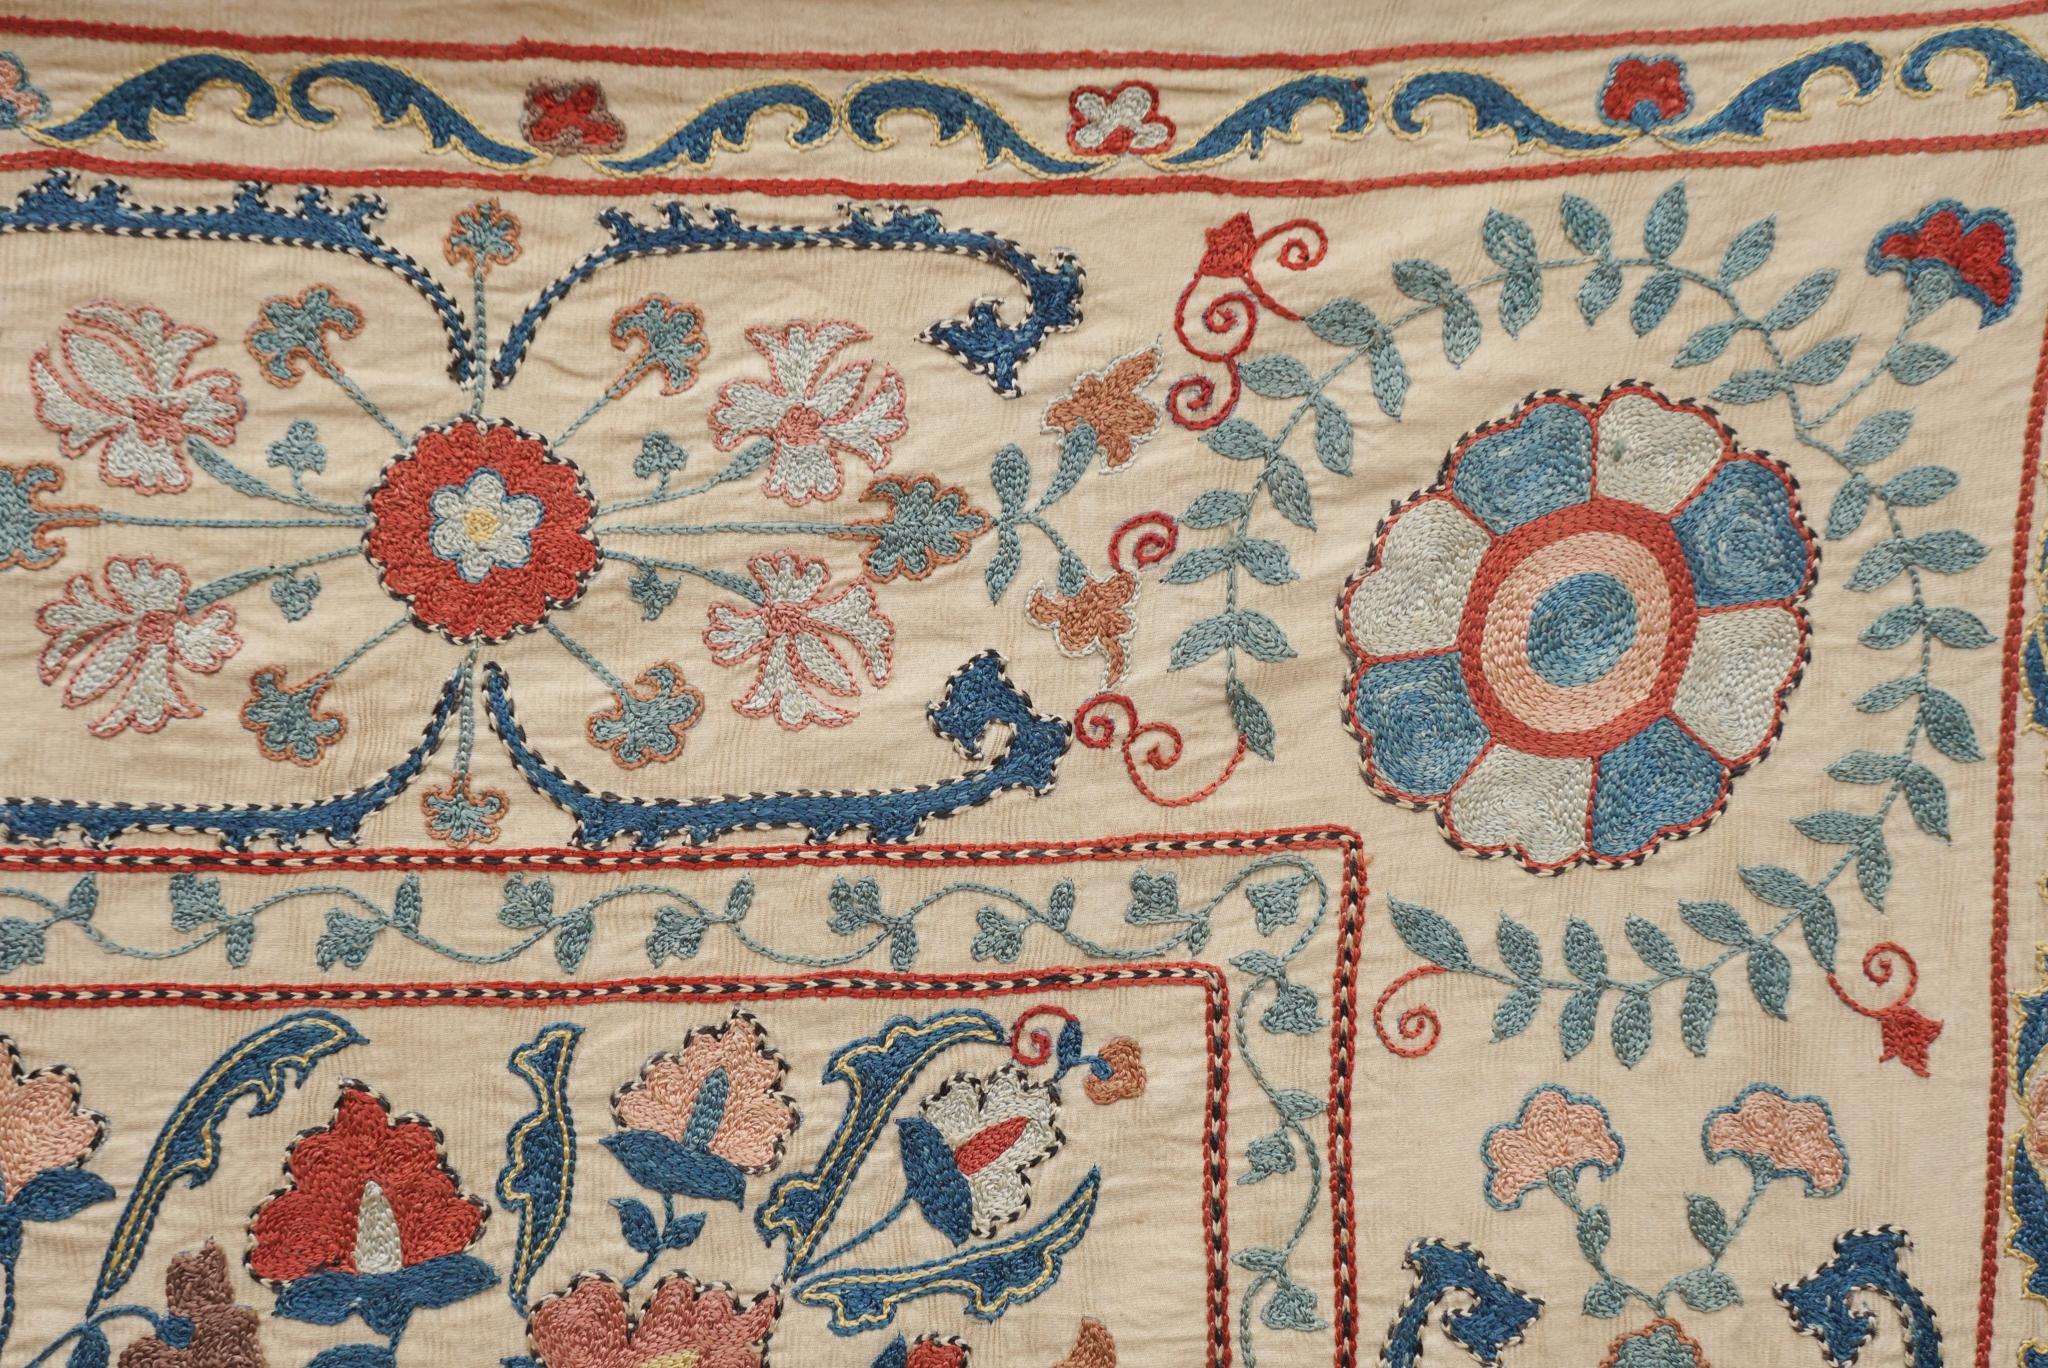 Uzbek Antique Suzani Embroidered Textile For Sale